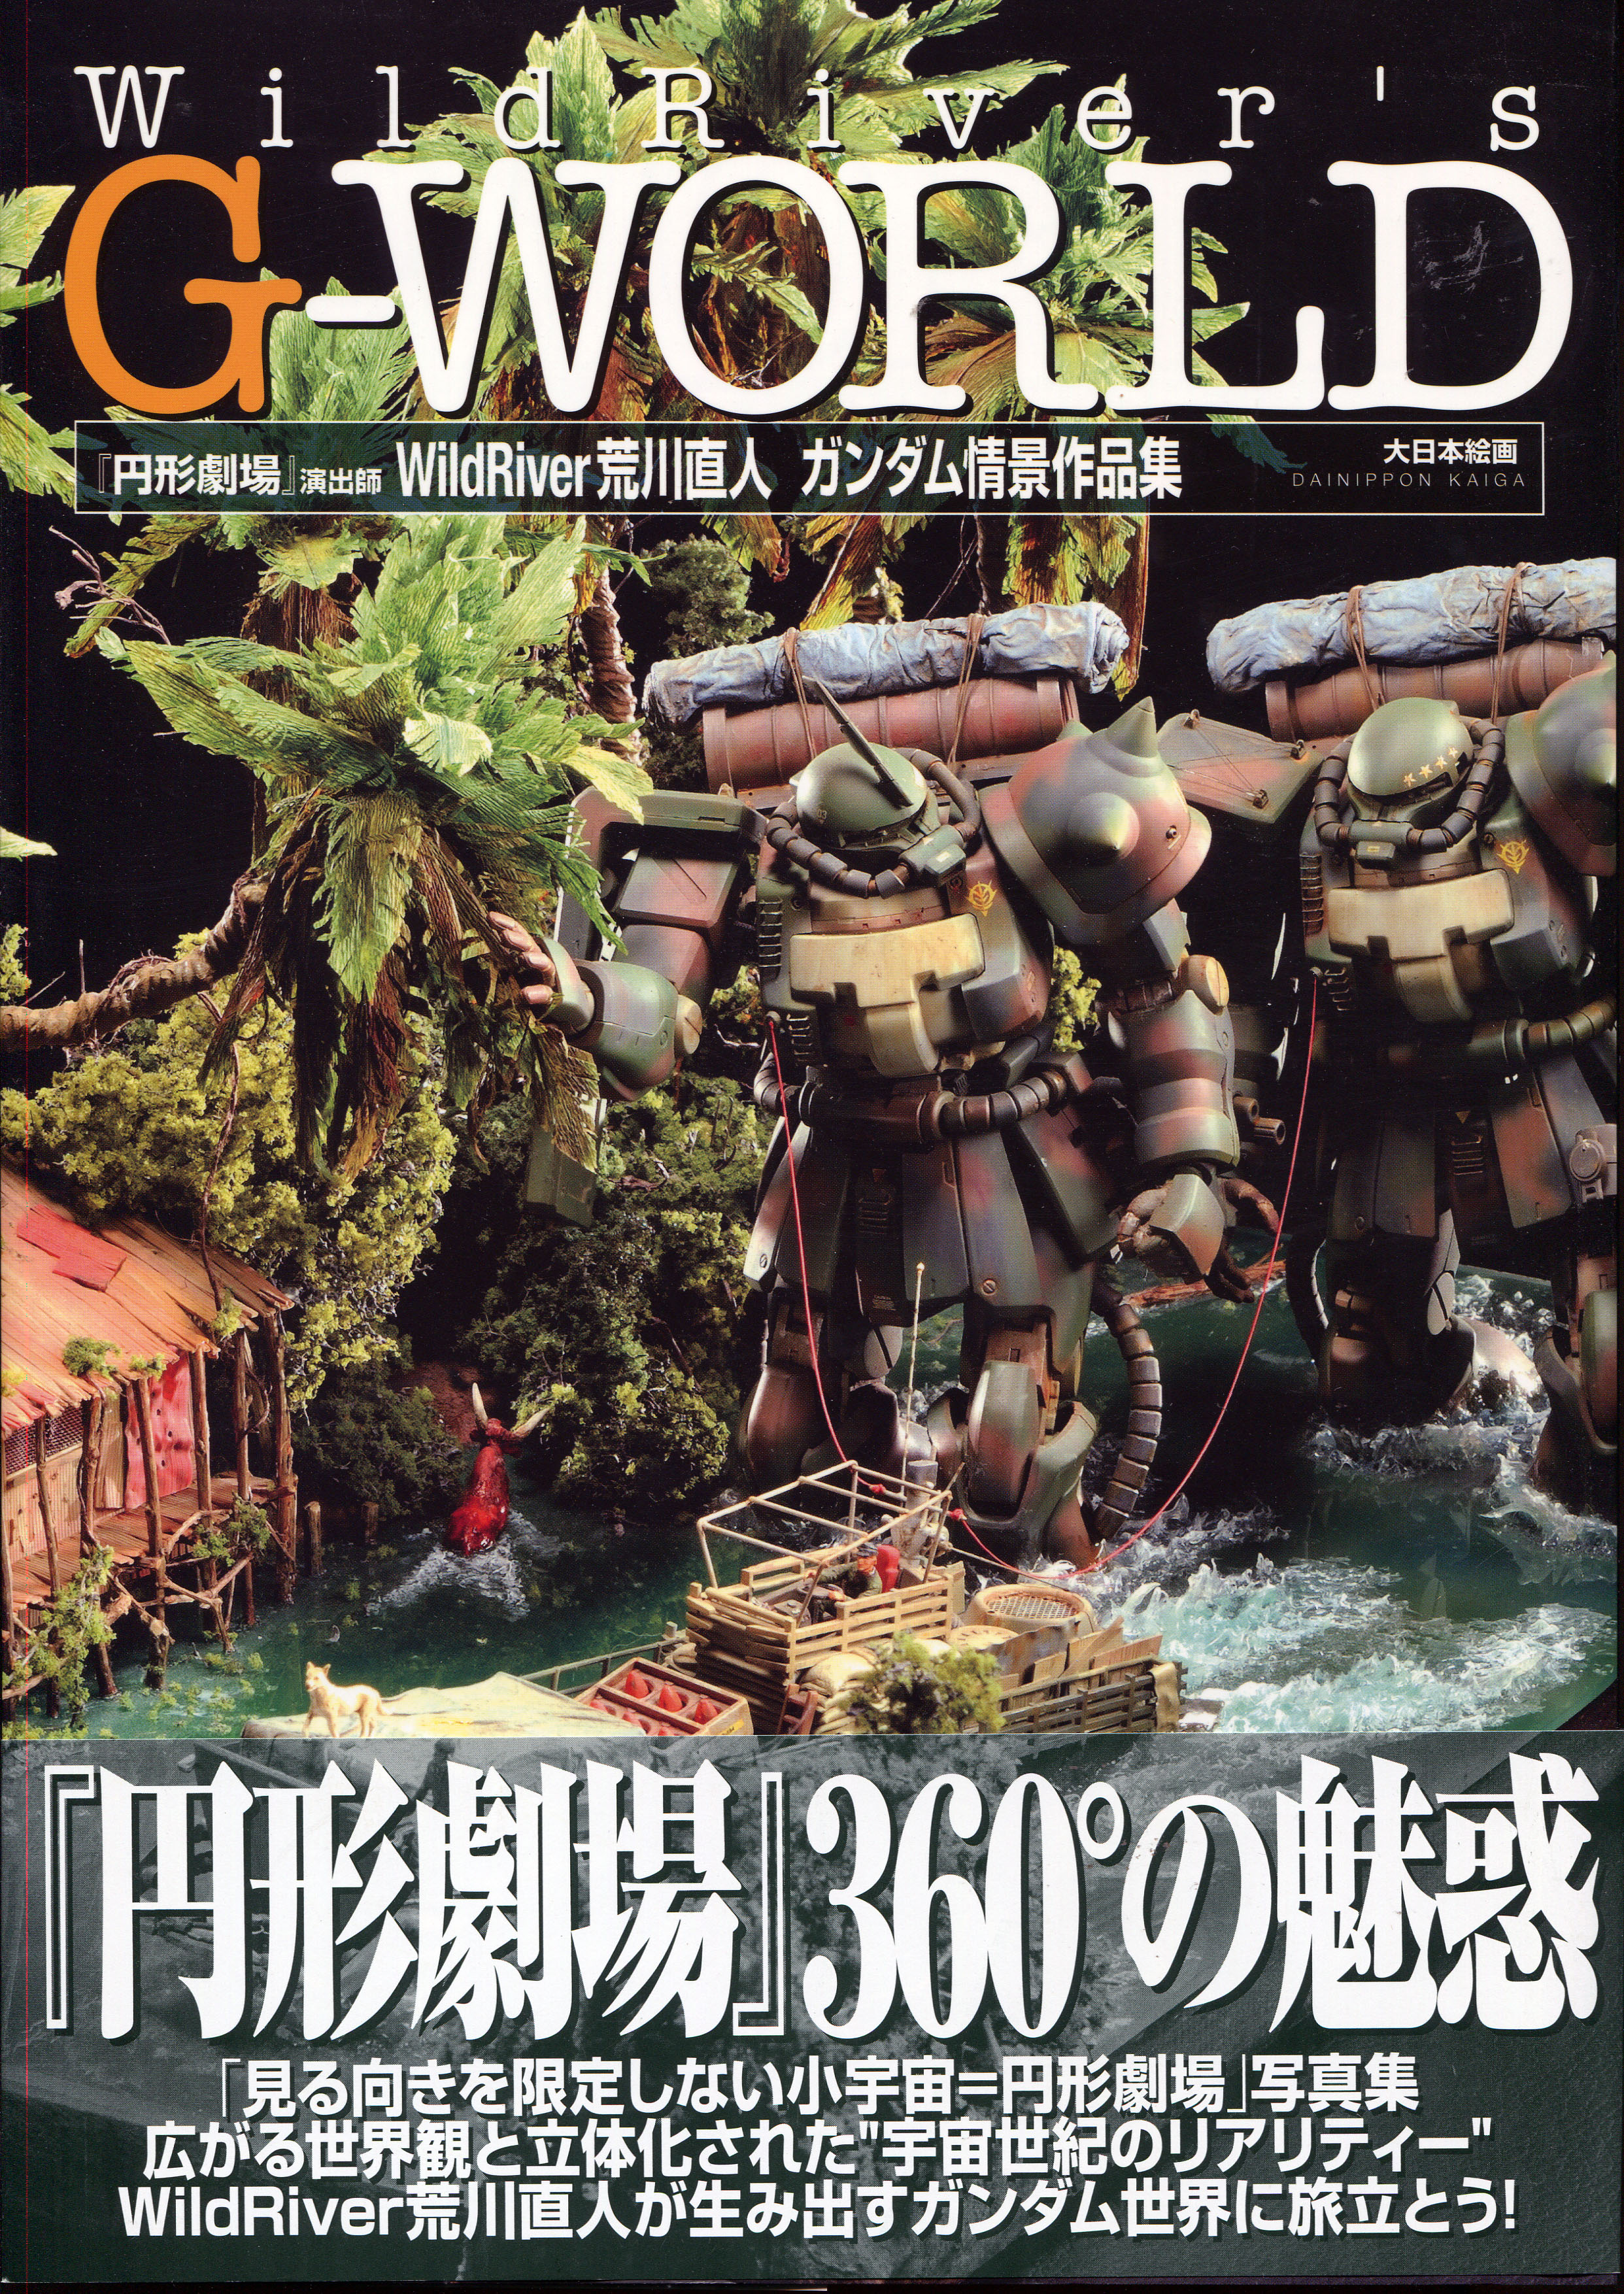 Gundam: WildRiver's G-WORLD - Environment Collection